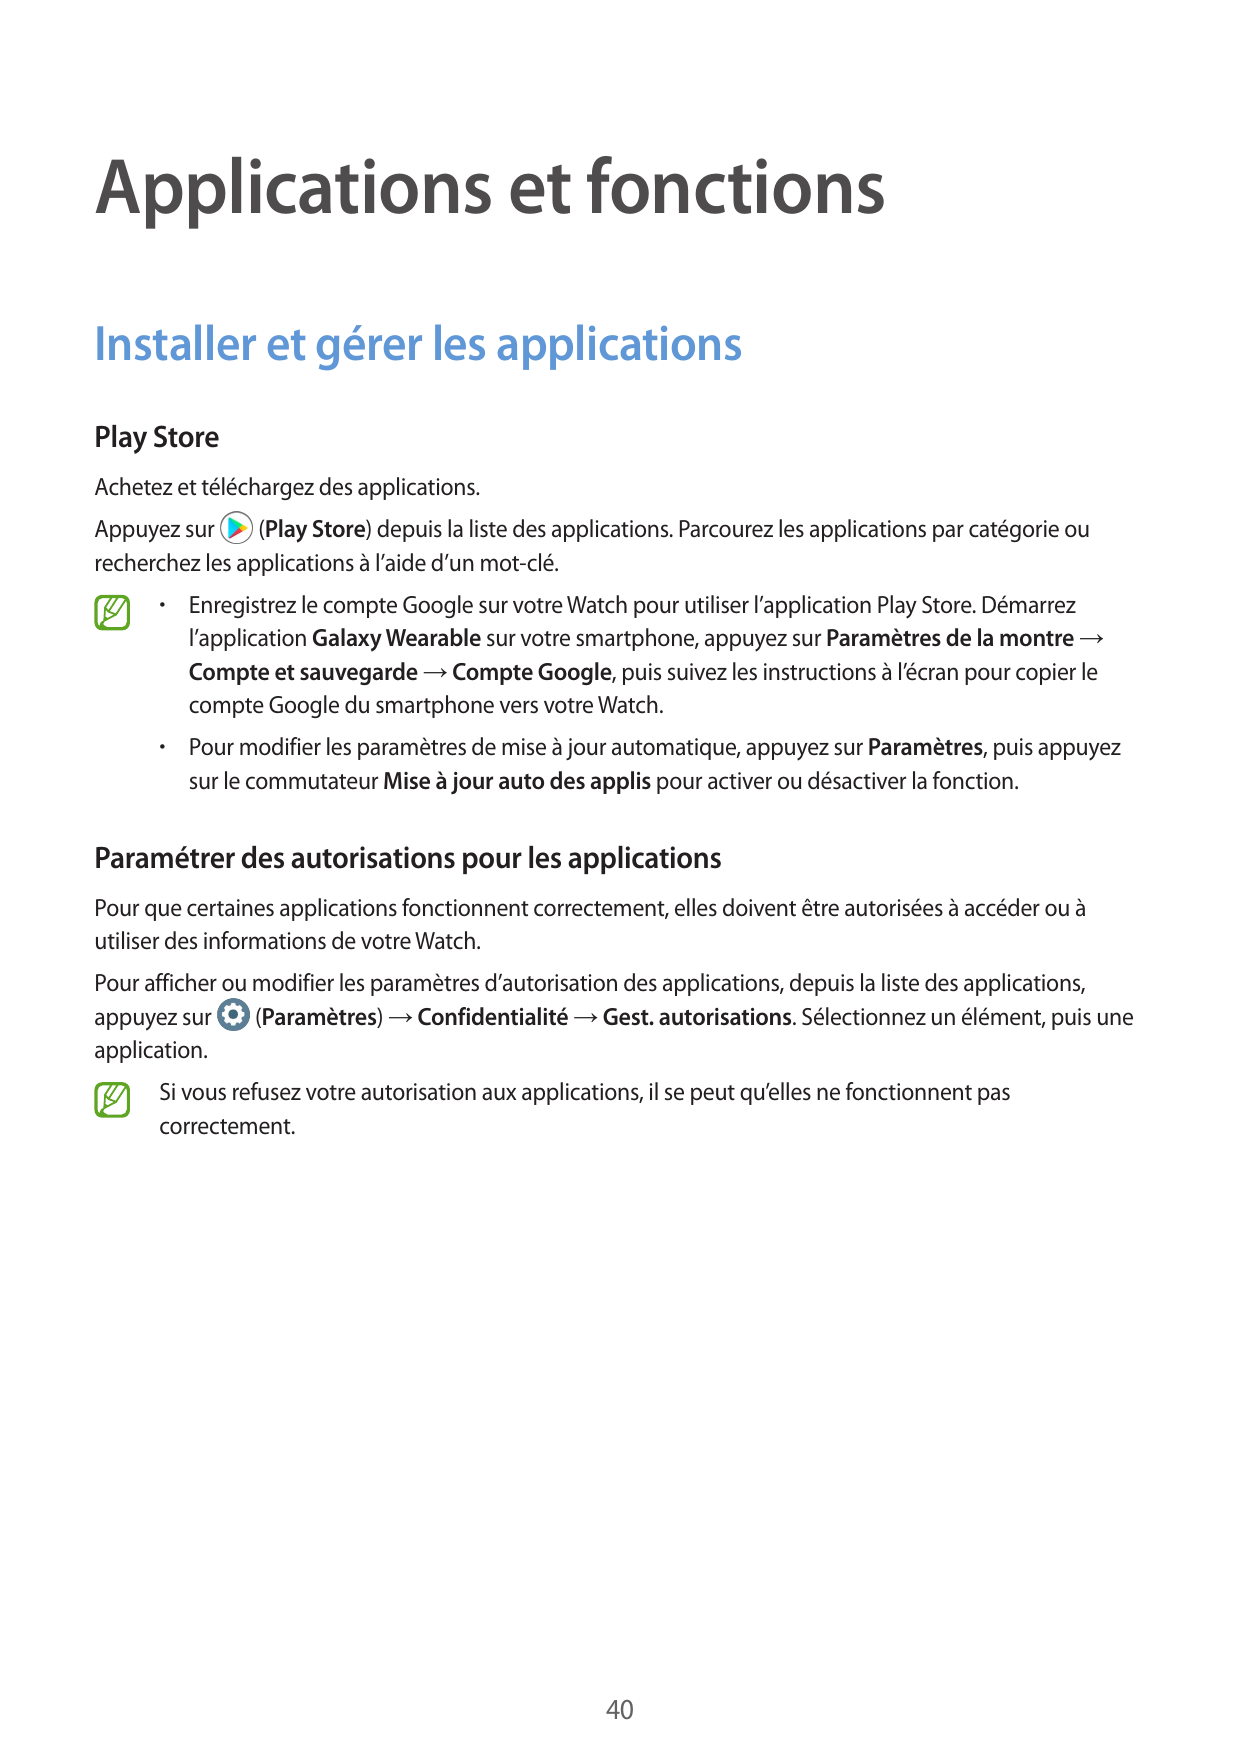 Applications et fonctionsInstaller et gérer les applicationsPlay StoreAchetez et téléchargez des applications.(Play Store) depui